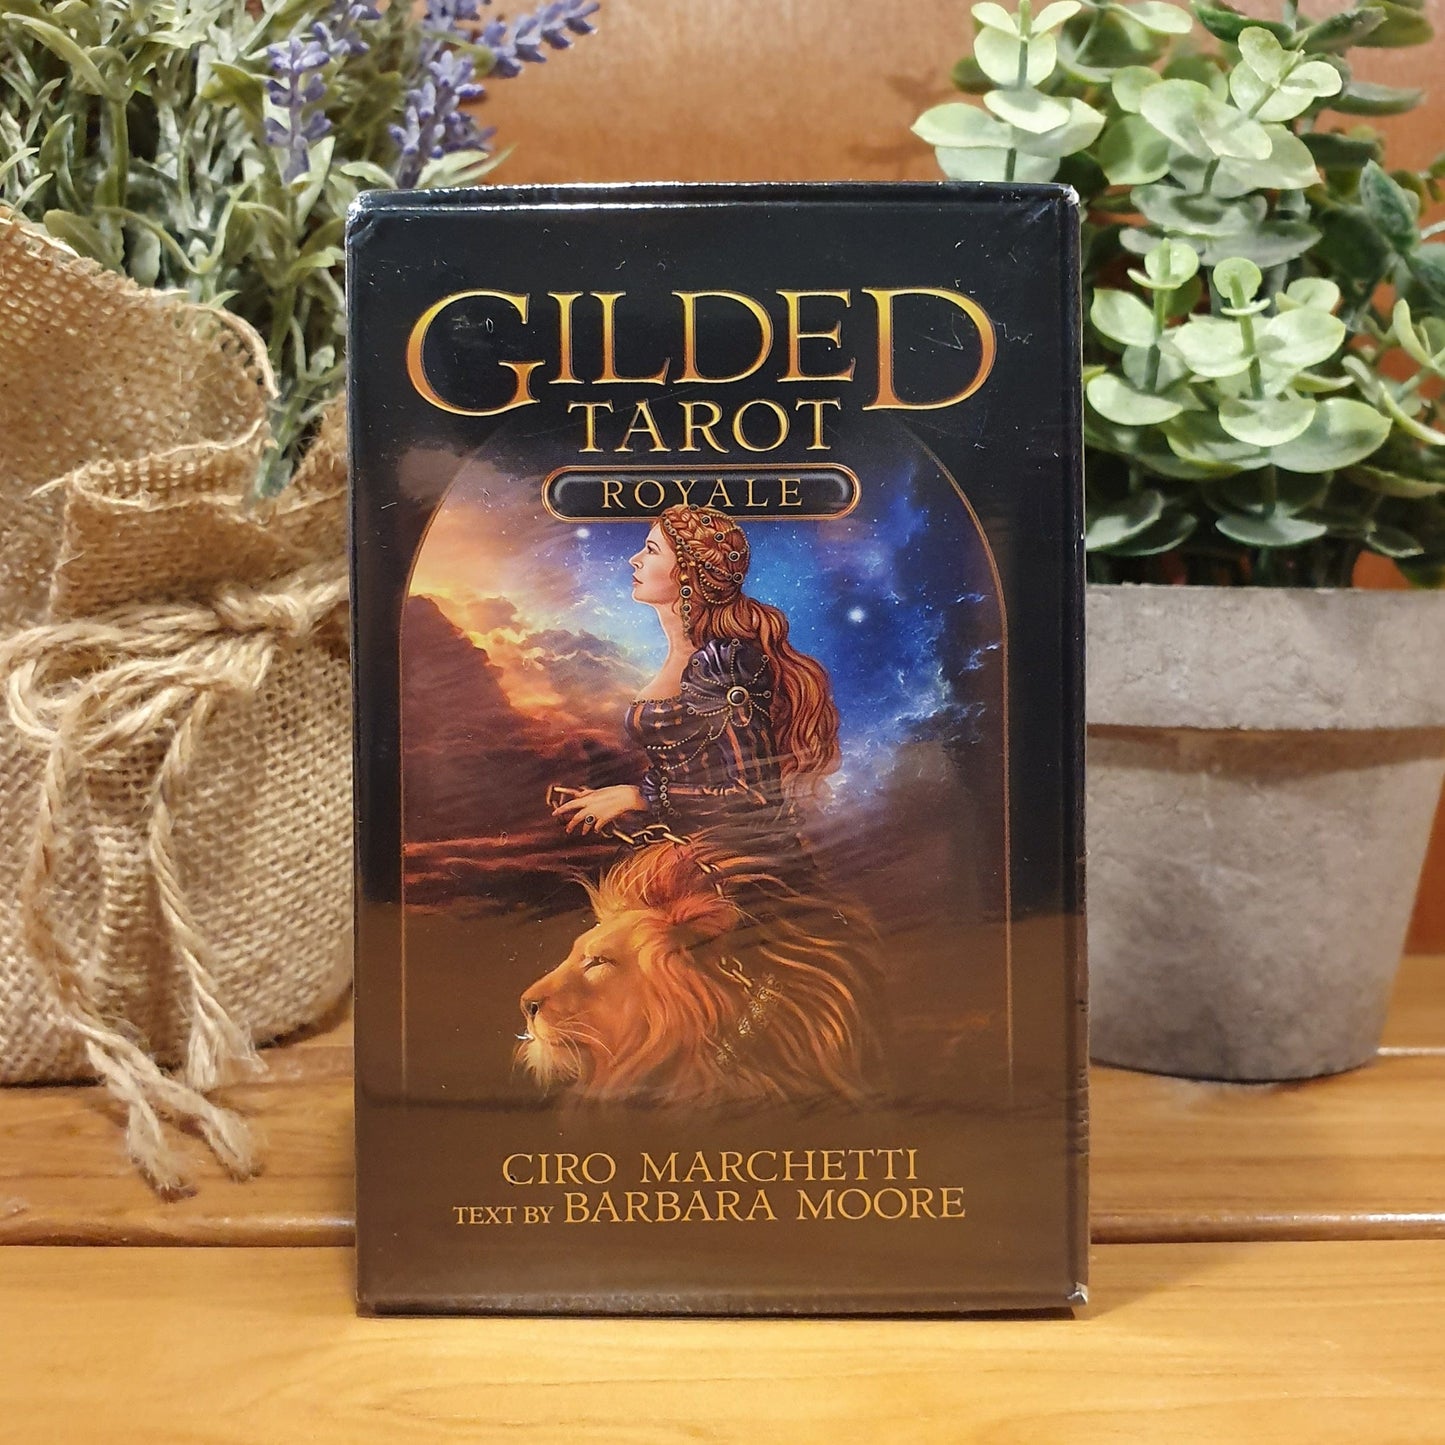 Gilded Tarot Royal by Ciro Marchetti